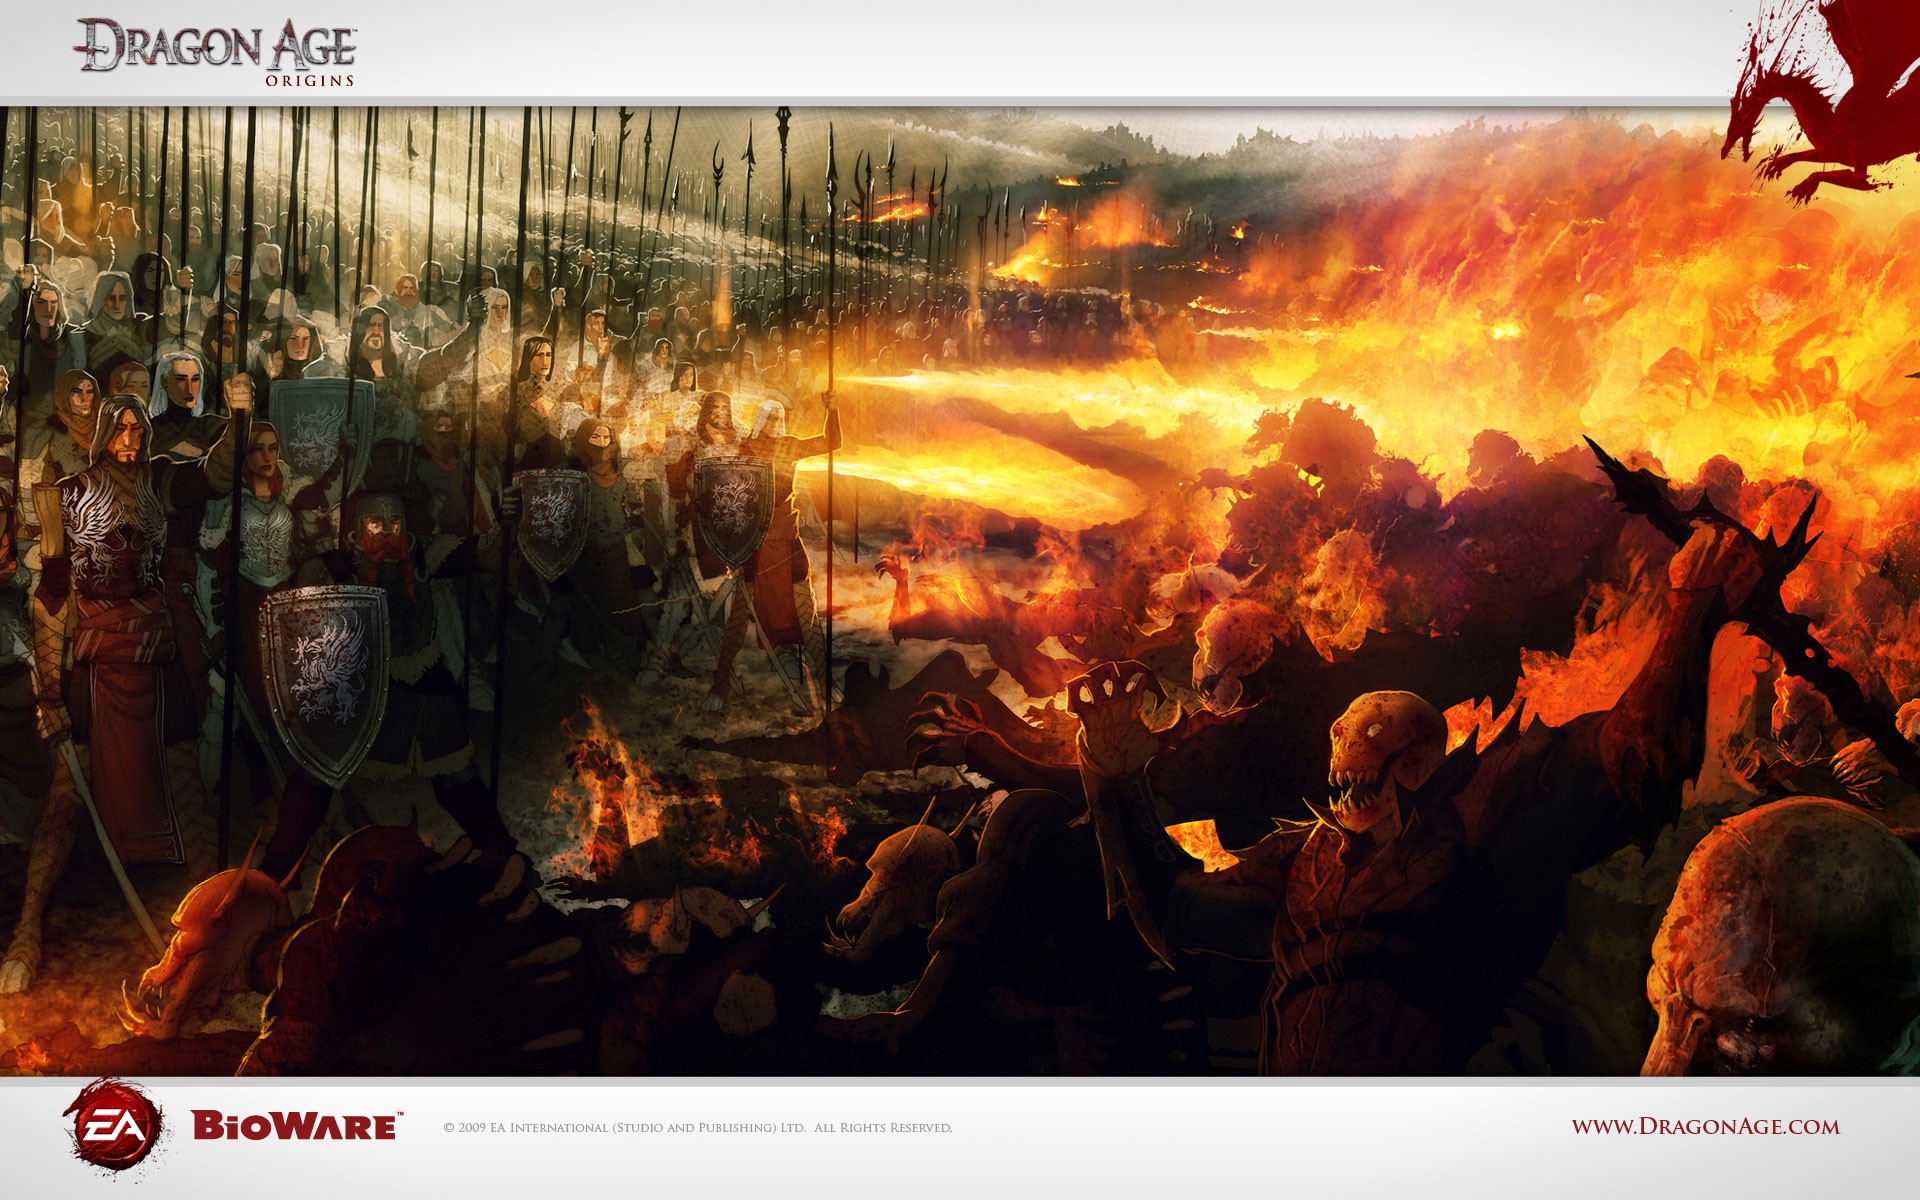 General 1920x1200 Dragon Age: Origins video games Bioware RPG PC gaming Electronic Arts 2009 (Year)